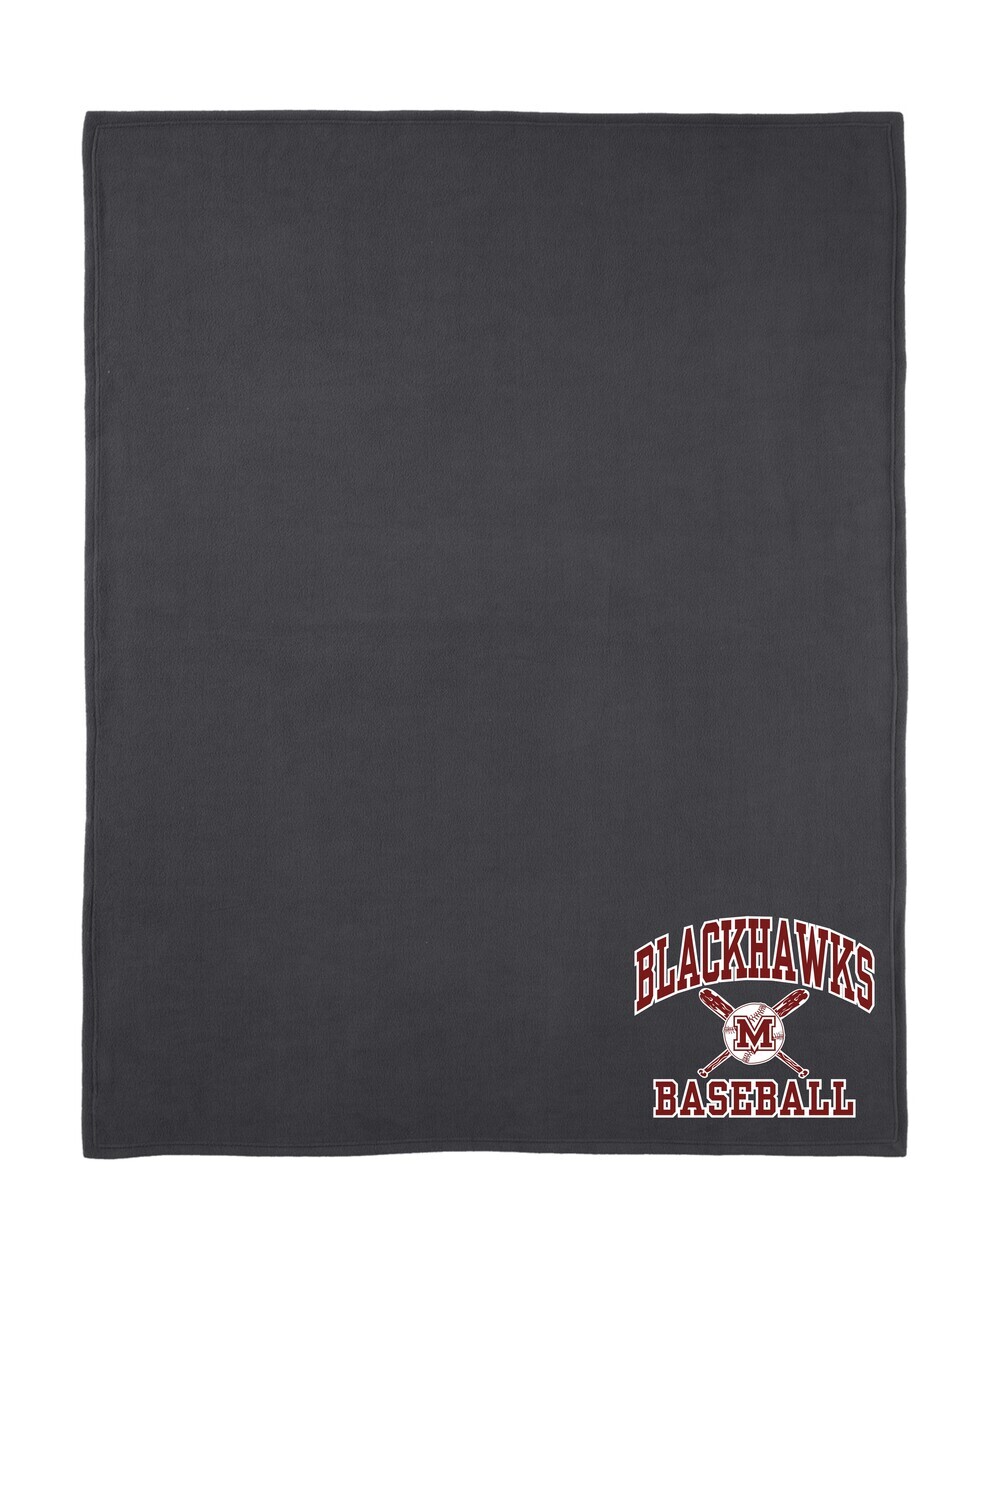 Moline Blackhawks Crossed Bats Logo Fleece Blanket with Carrying Strap